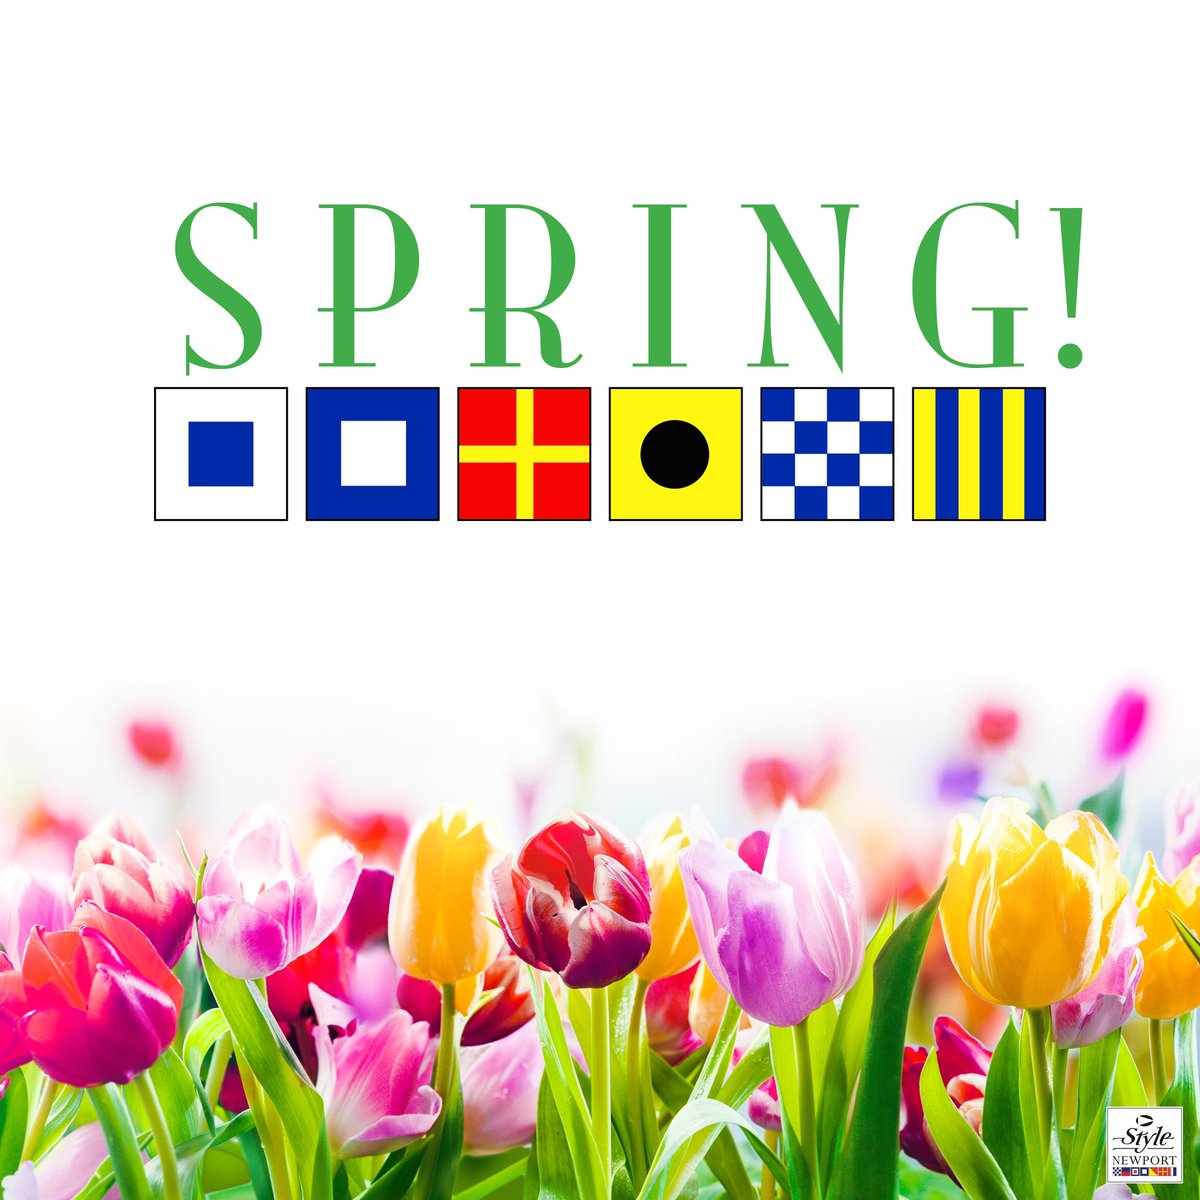 Hello S🌸P🌷R🌼I🌺N💐G!
#spring #springequinox #hellospring #byewinter #signalflags #nauticalsignalflags #maritimeflags #sailingstyle #yachtstyle #newportri #newport